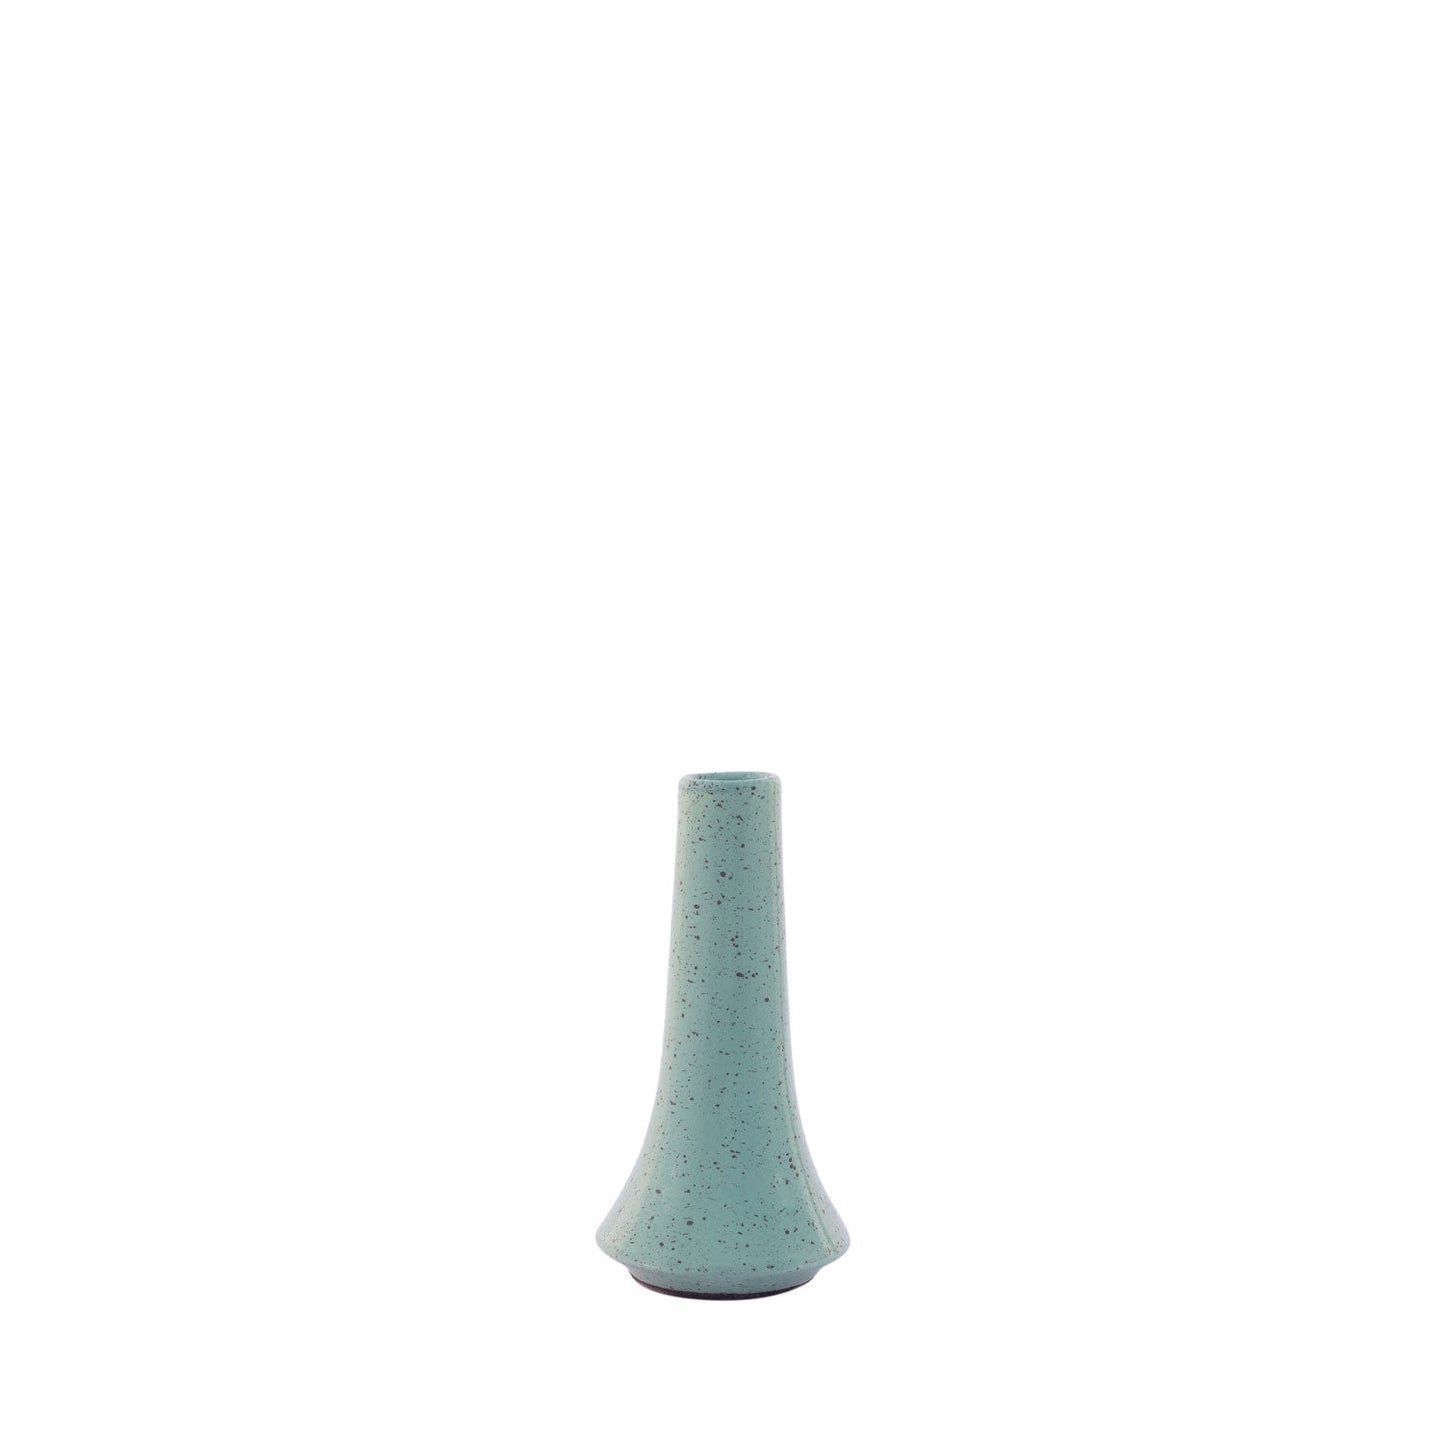 Vaso de Cerâmica Sortelha Verde Granito 24 cm